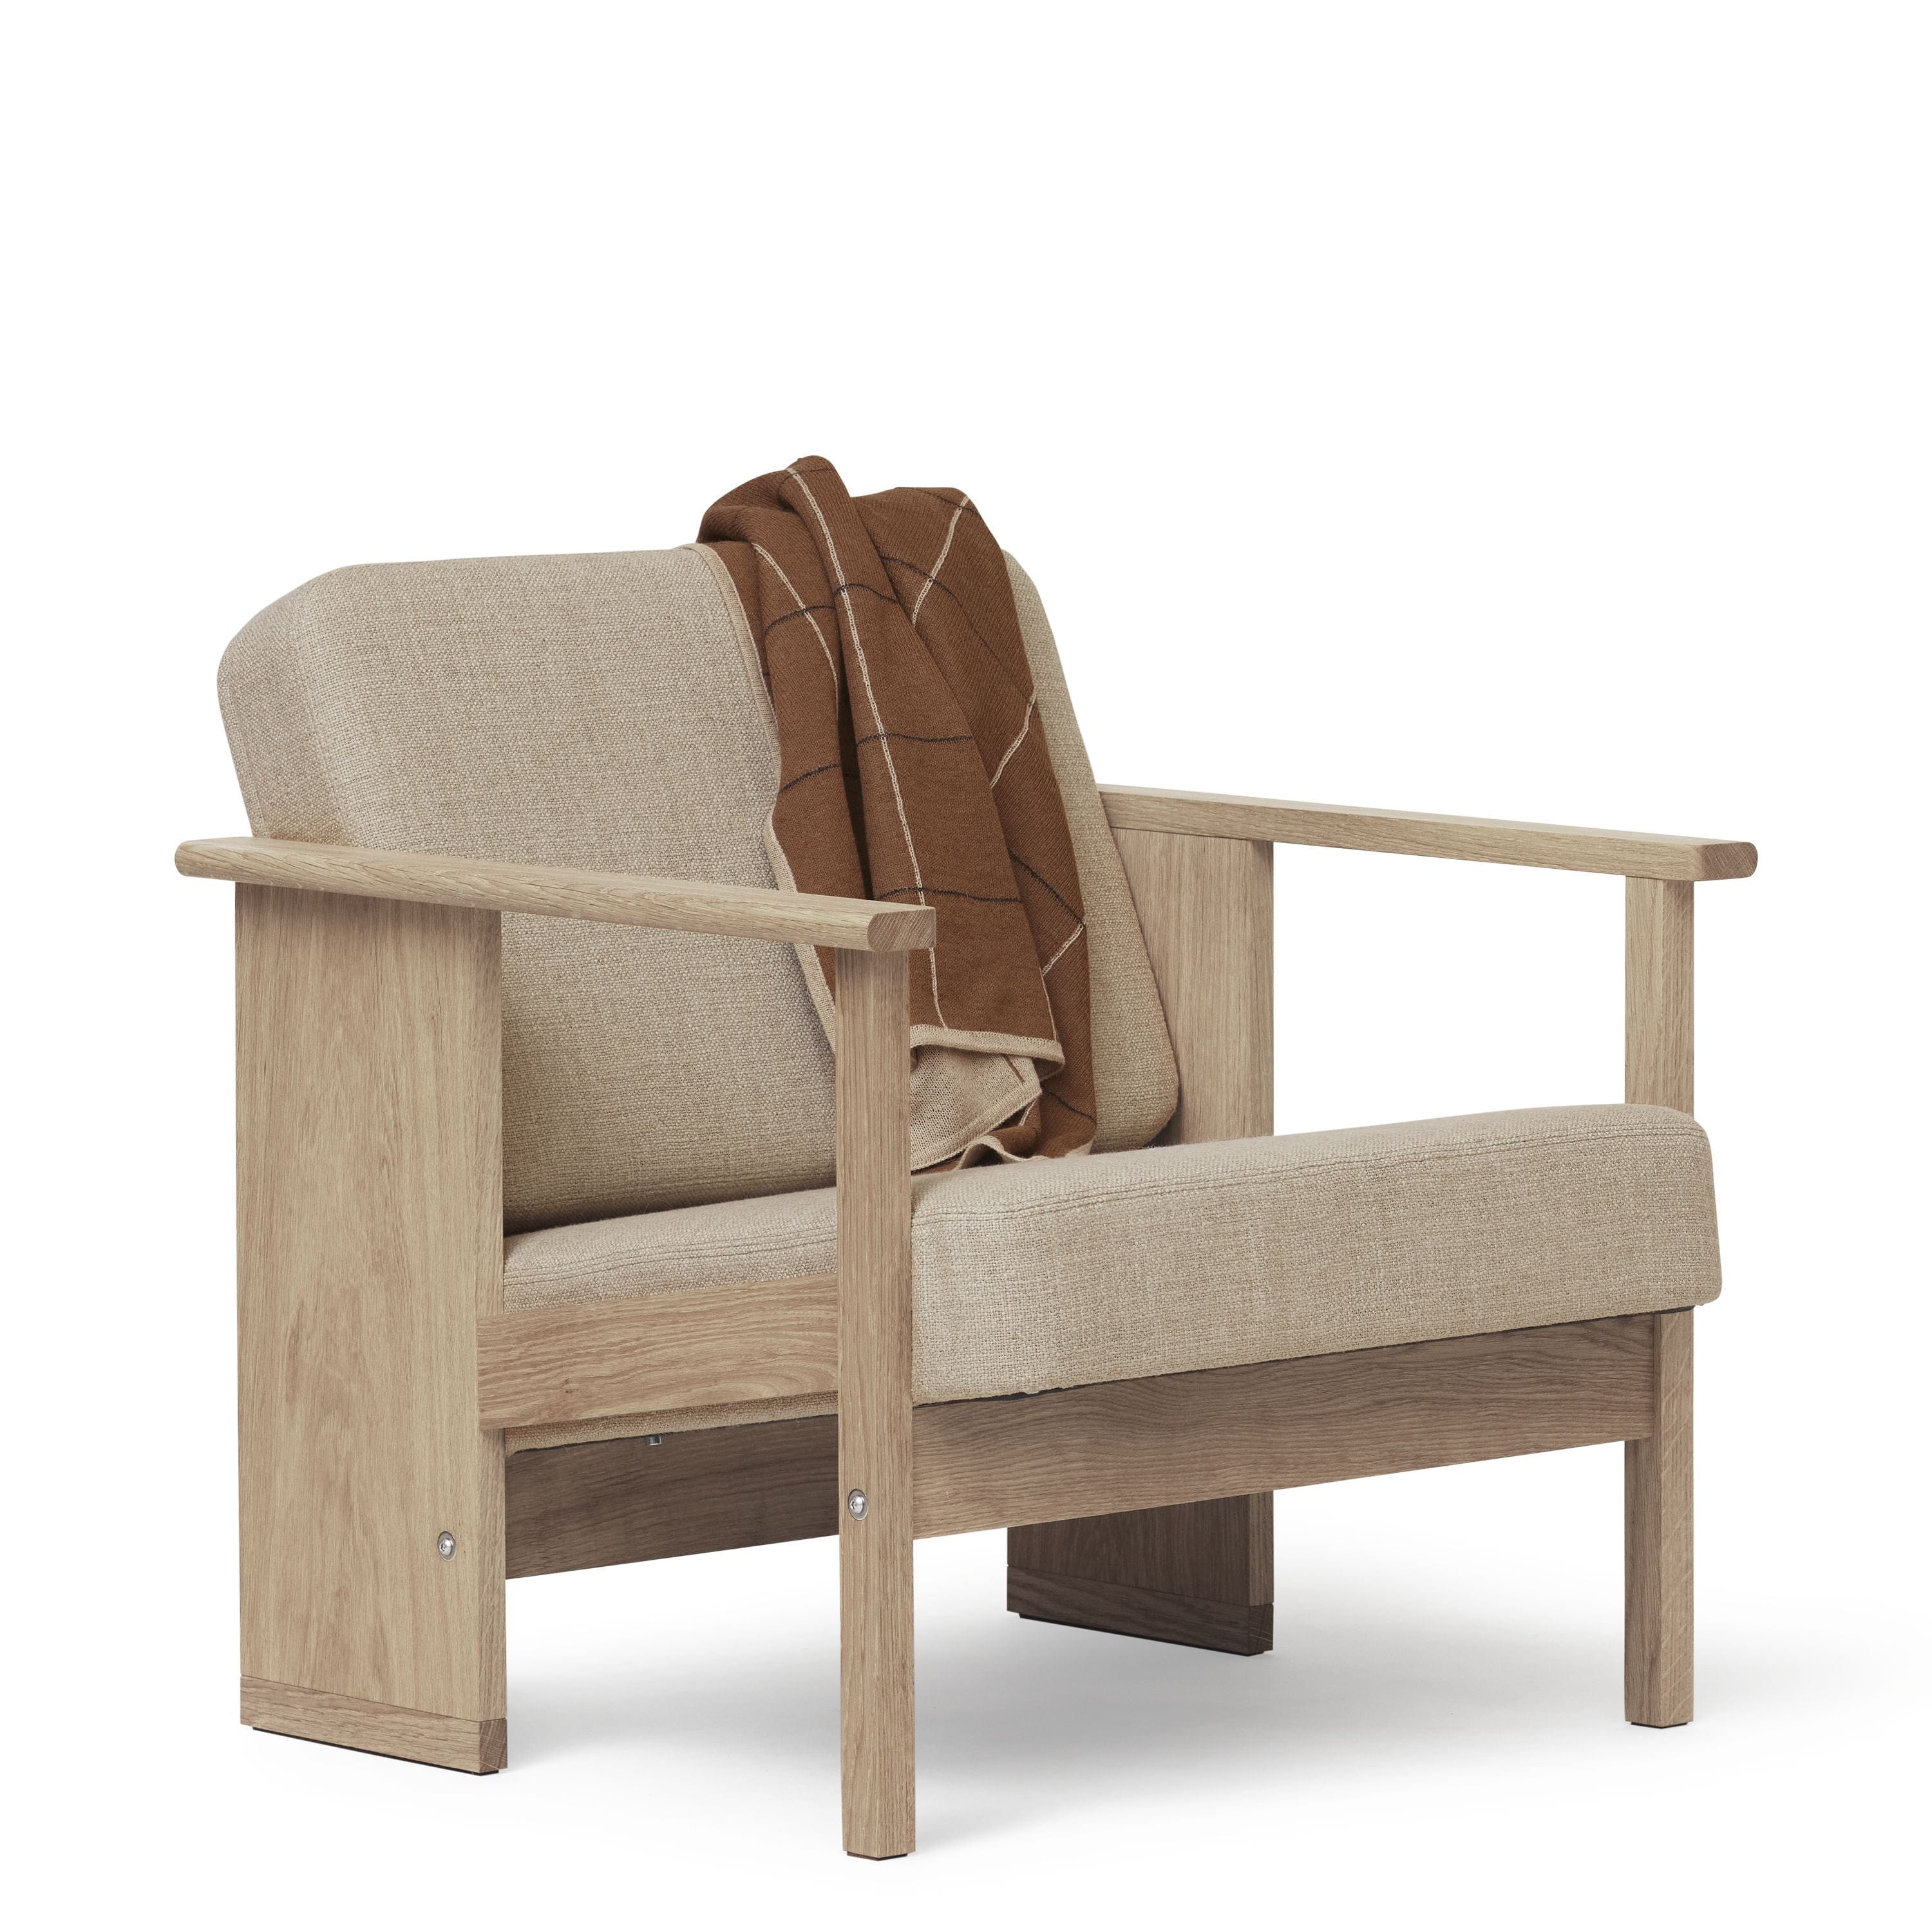 Form&Refine Block Lounge Chair, Hvid Olie Eg